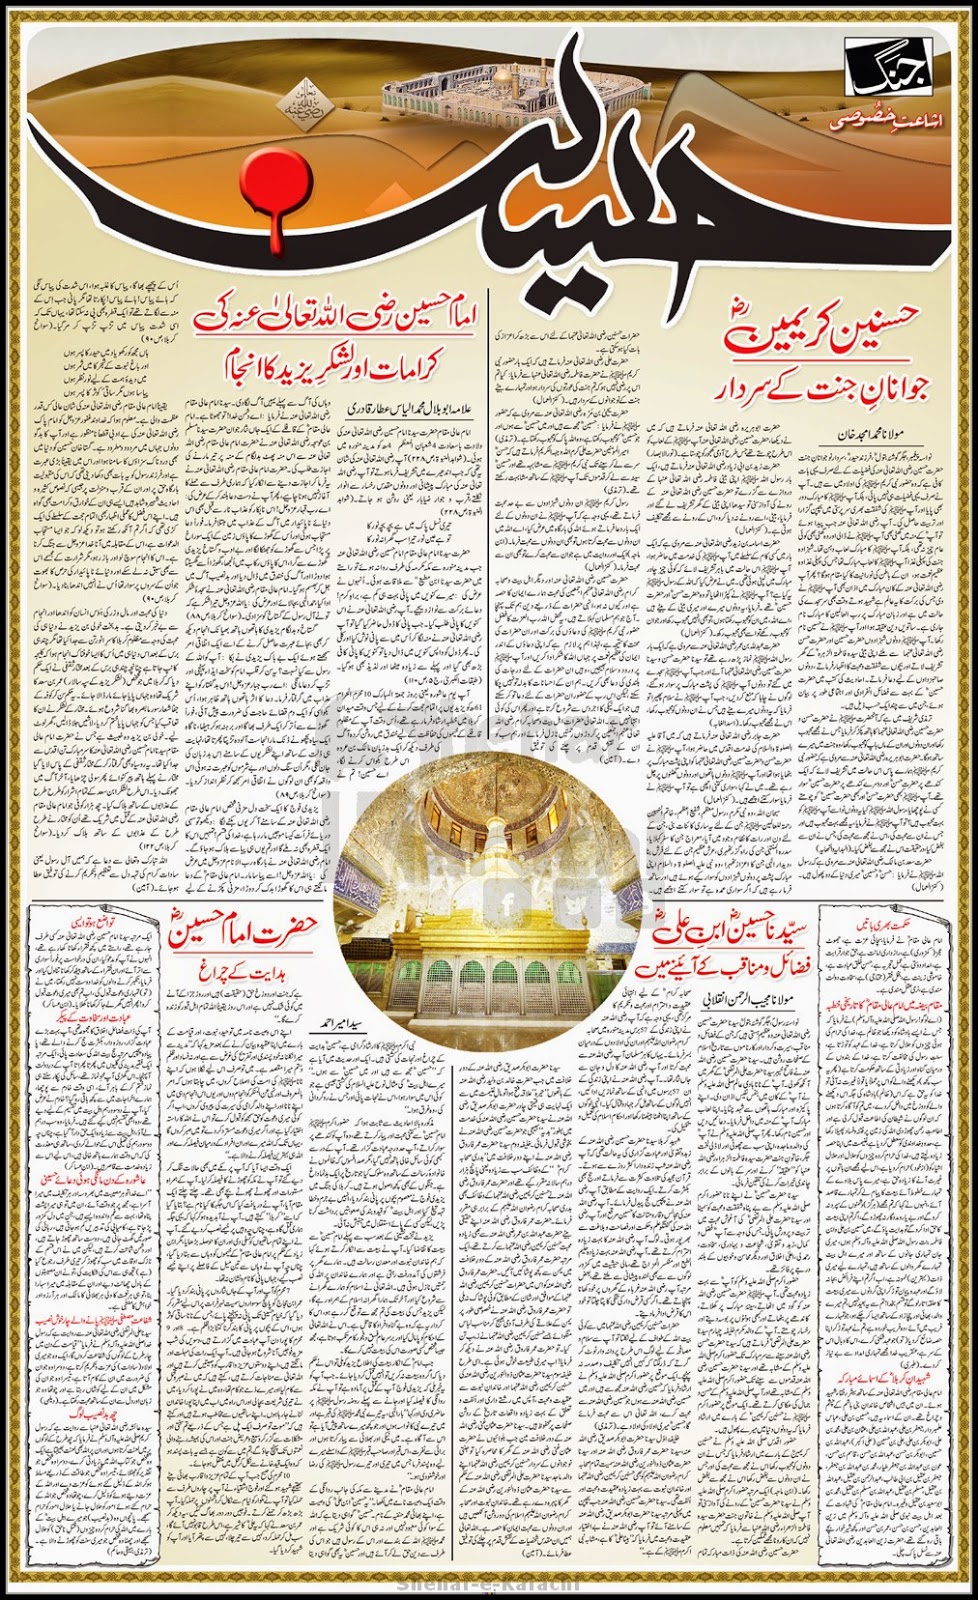 Read Urdu Article of Hazrat Imam Hussain (R.A).